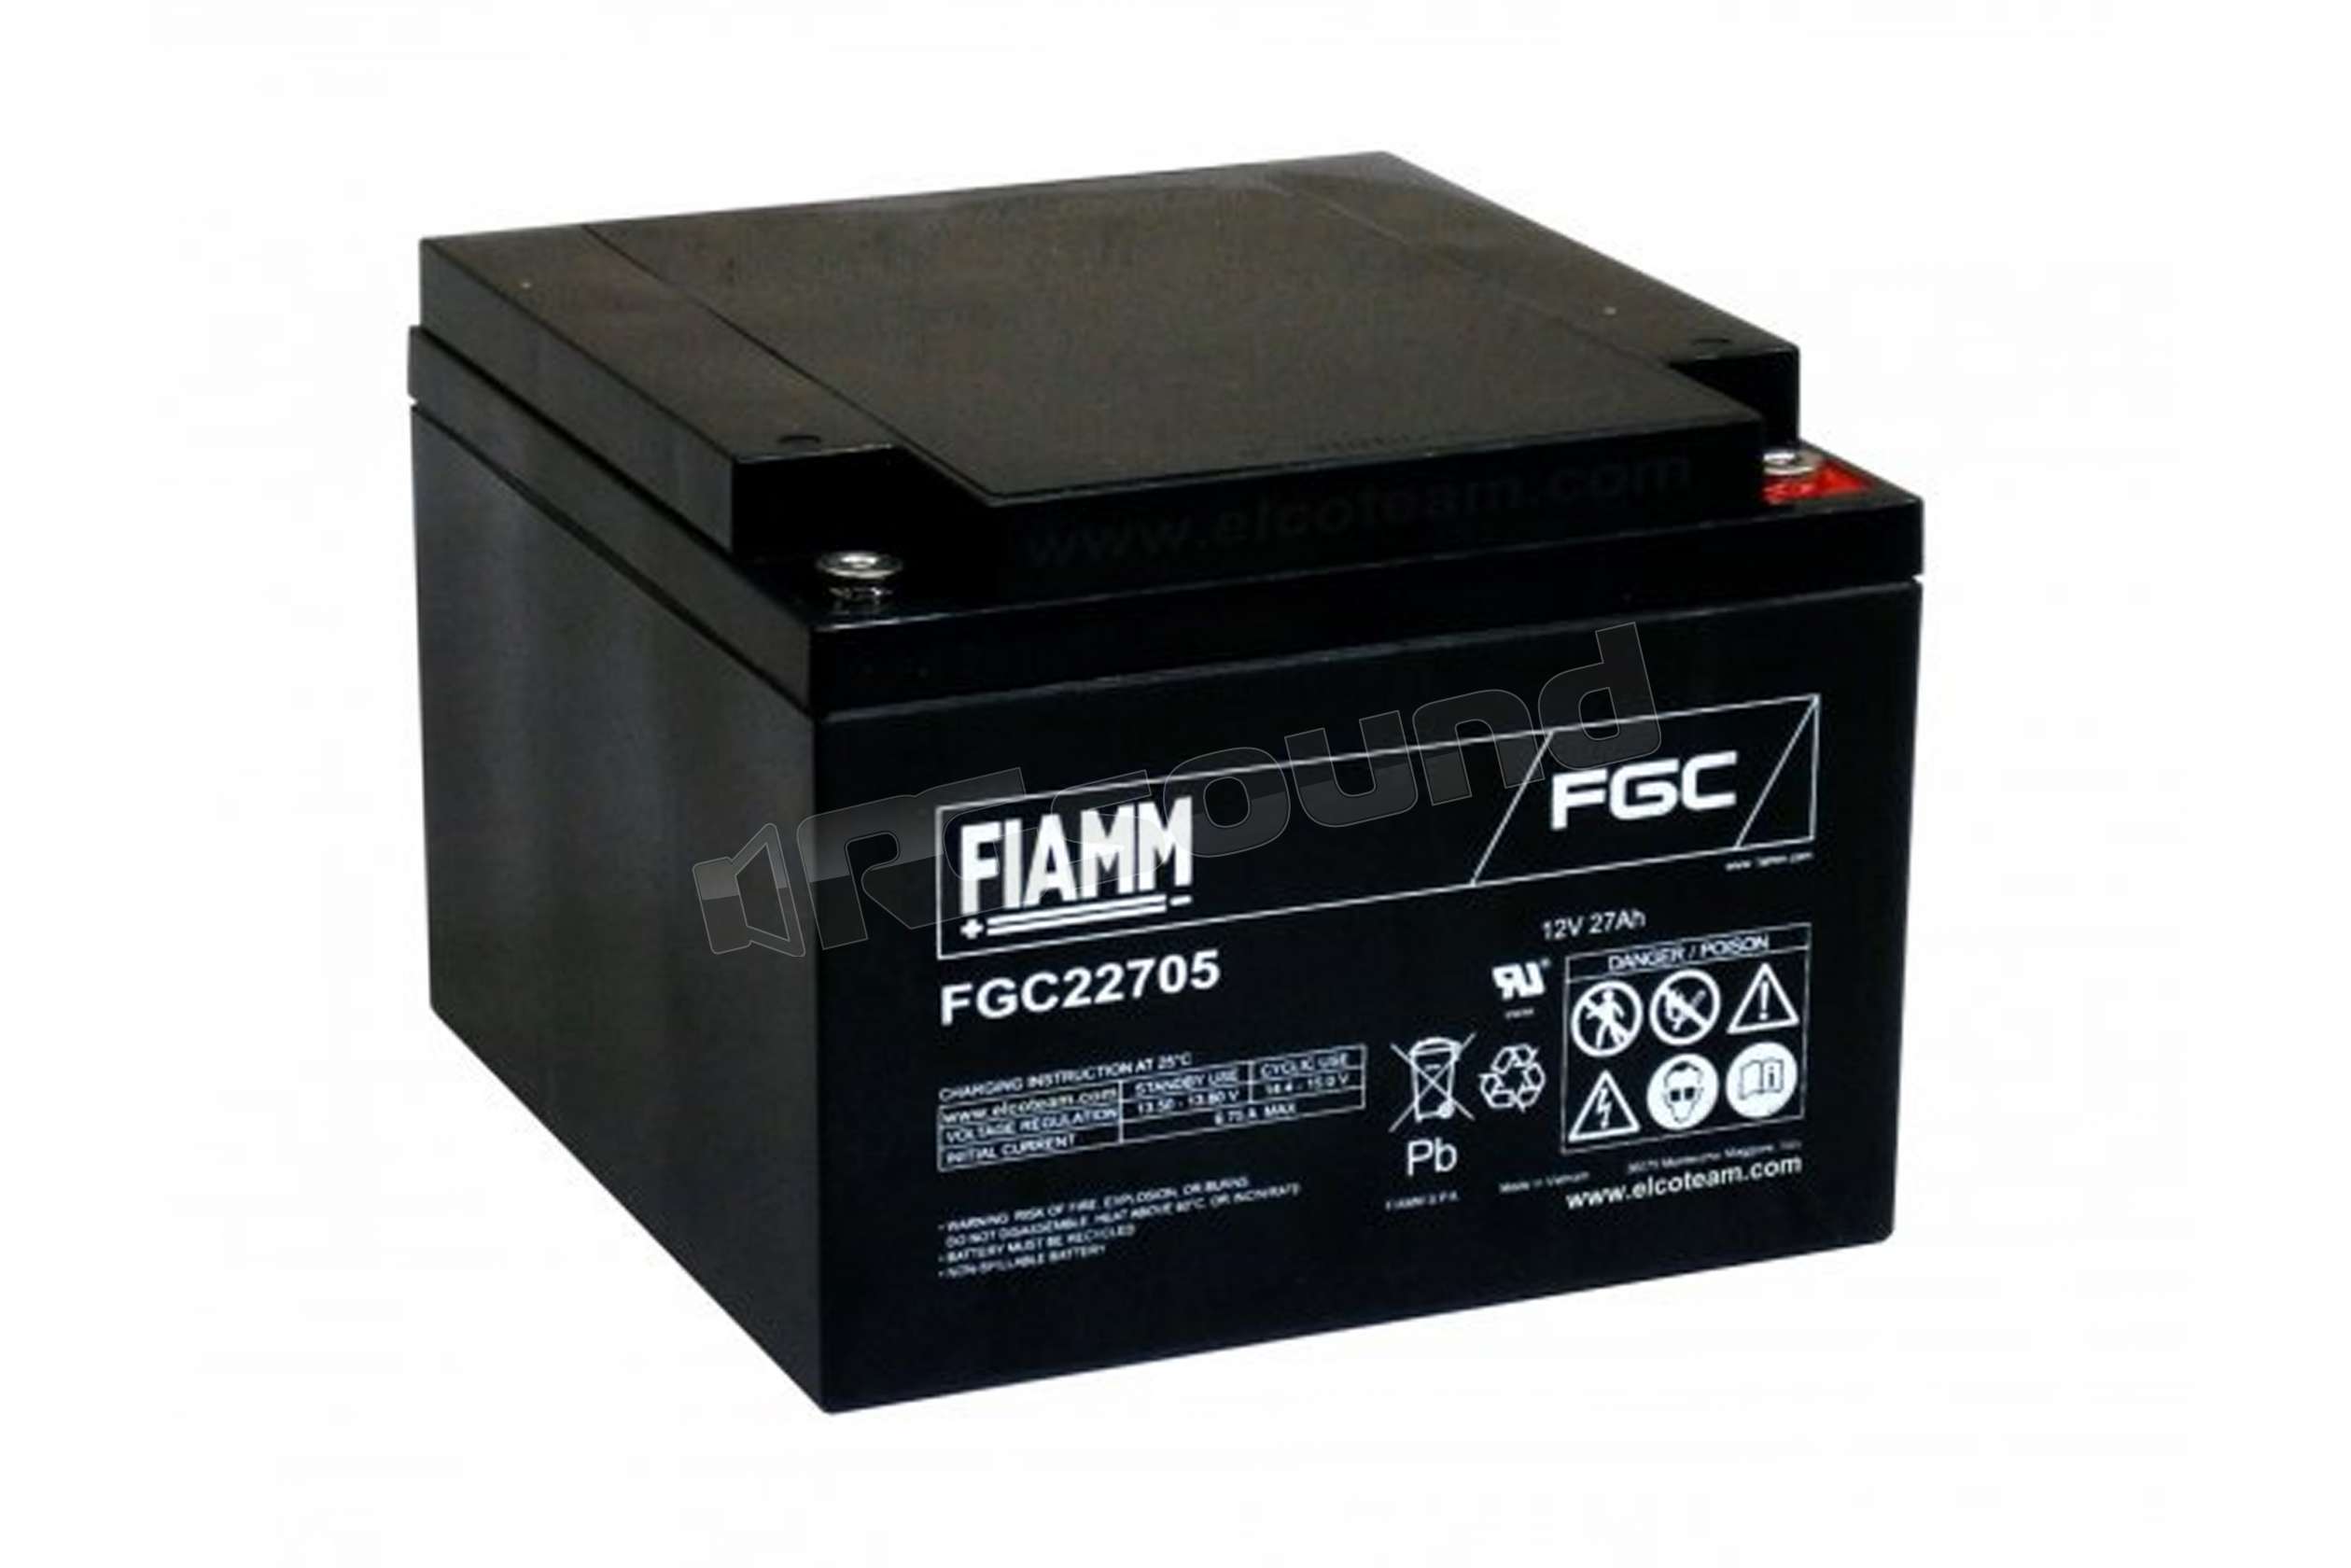 Fiamm 12v. Аккумулятор FIAMM 12v. Аккумуляторная батарея FIAMM (12v 17ah). Батарея аккумуляторная FIAMM d7 125 AGM. Аккумуляторы AGM Fiam 12v 7ah.